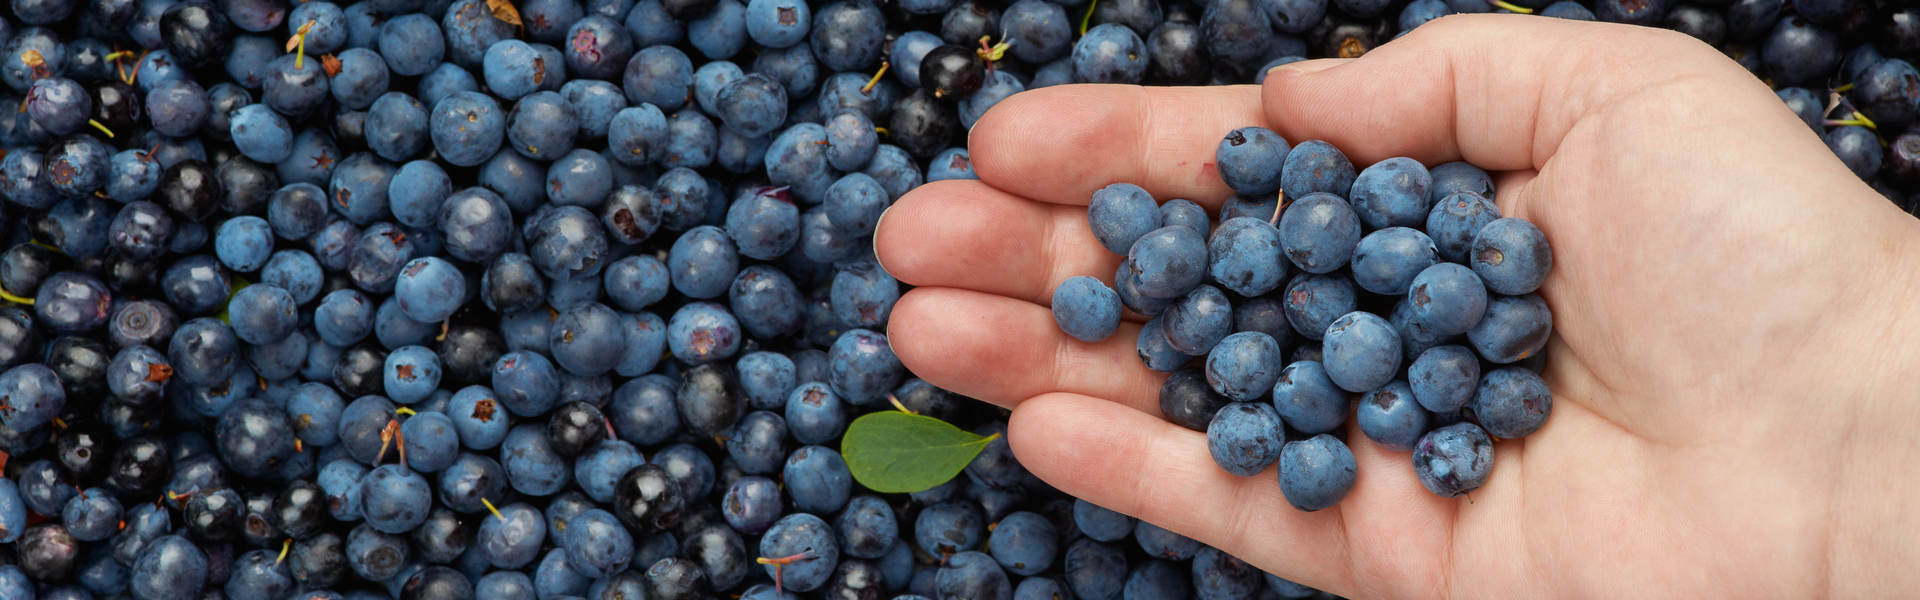 Hand grabbing a handful of blueberries